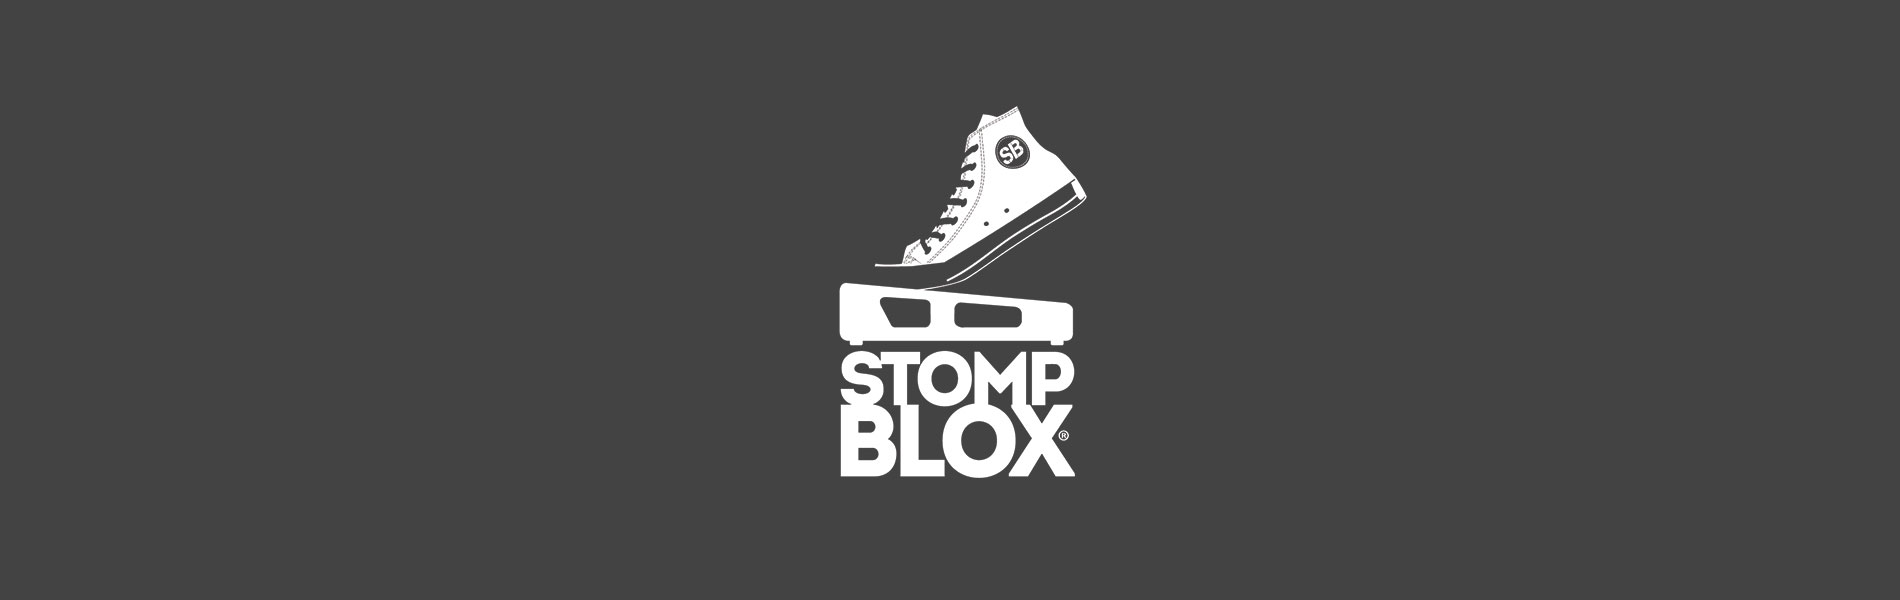 Stompblox pedal board web header